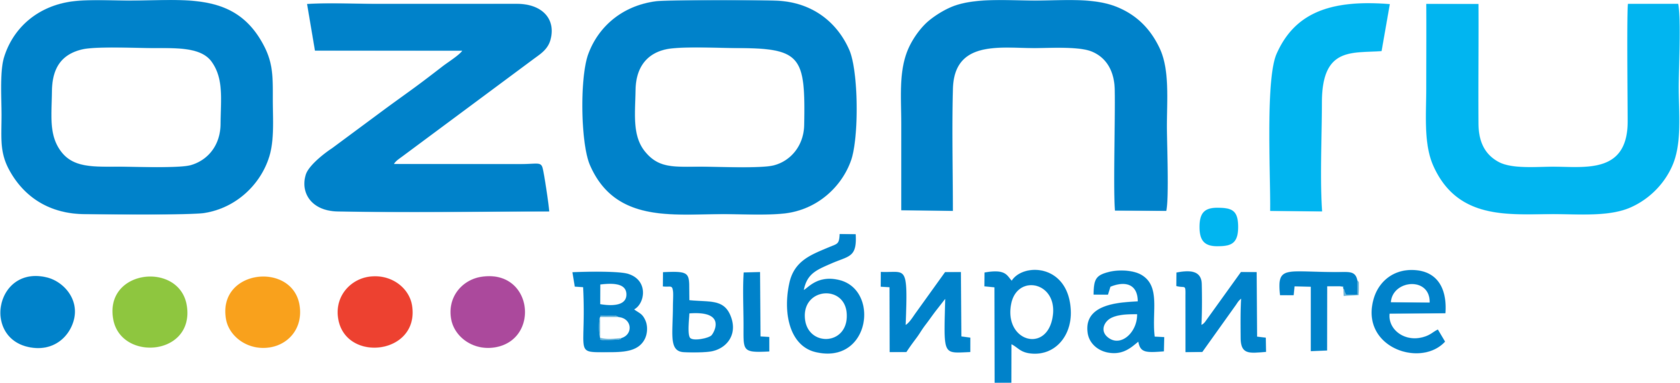 Озон интернет магазин ул. Озон логотип. Магазин Озон логотип. Озон логотип 2021. Осан.